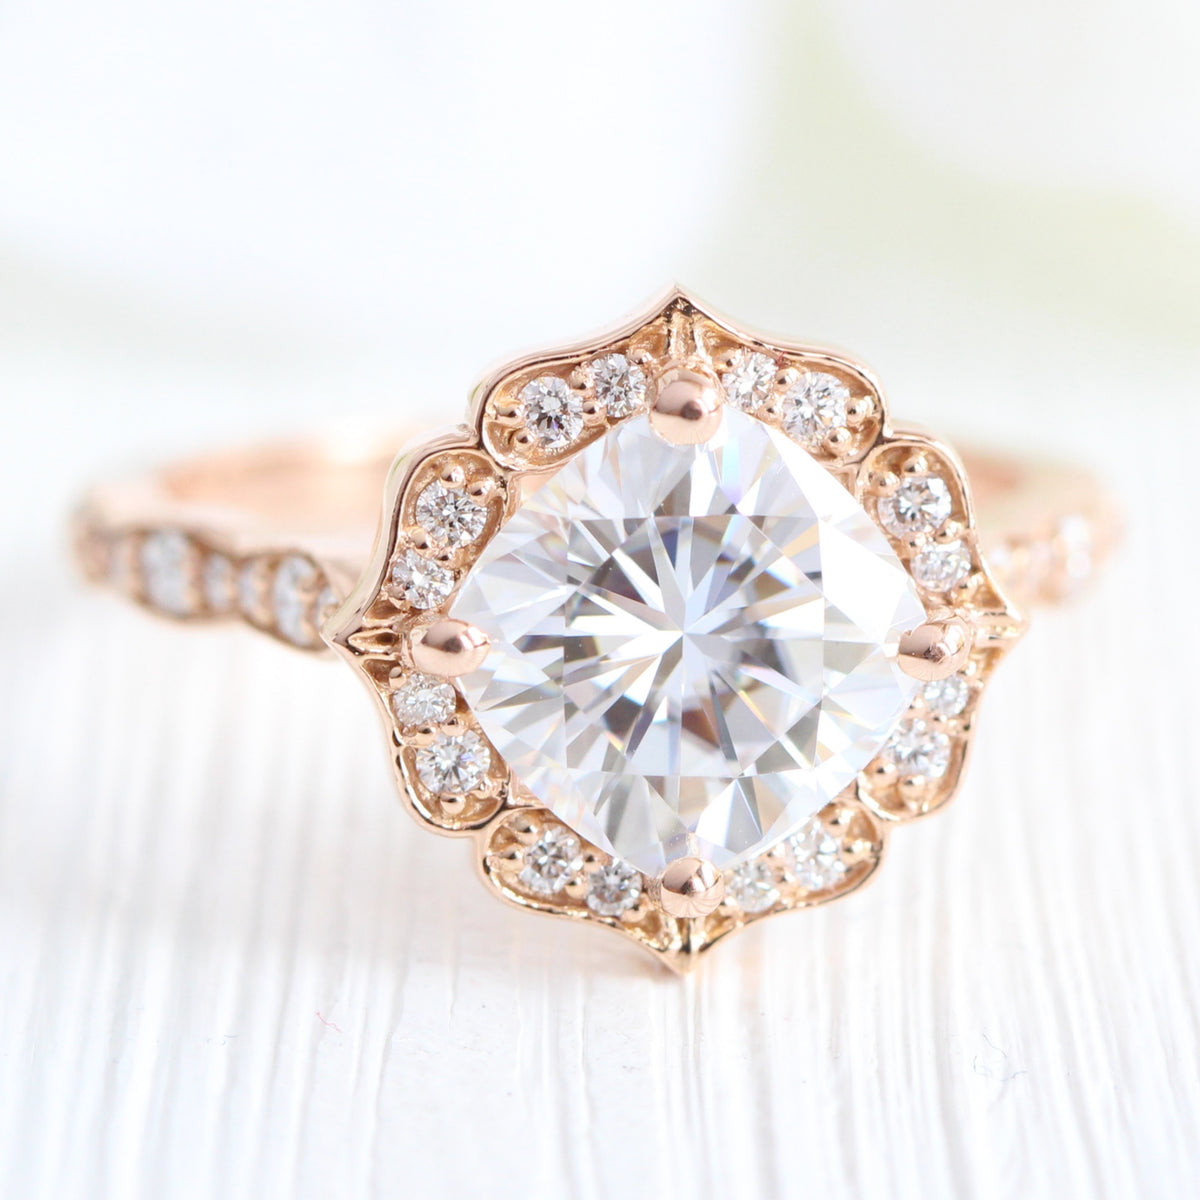 cushion moissanite engagement ring white gold vintage halo diamond ring la more design jewelry